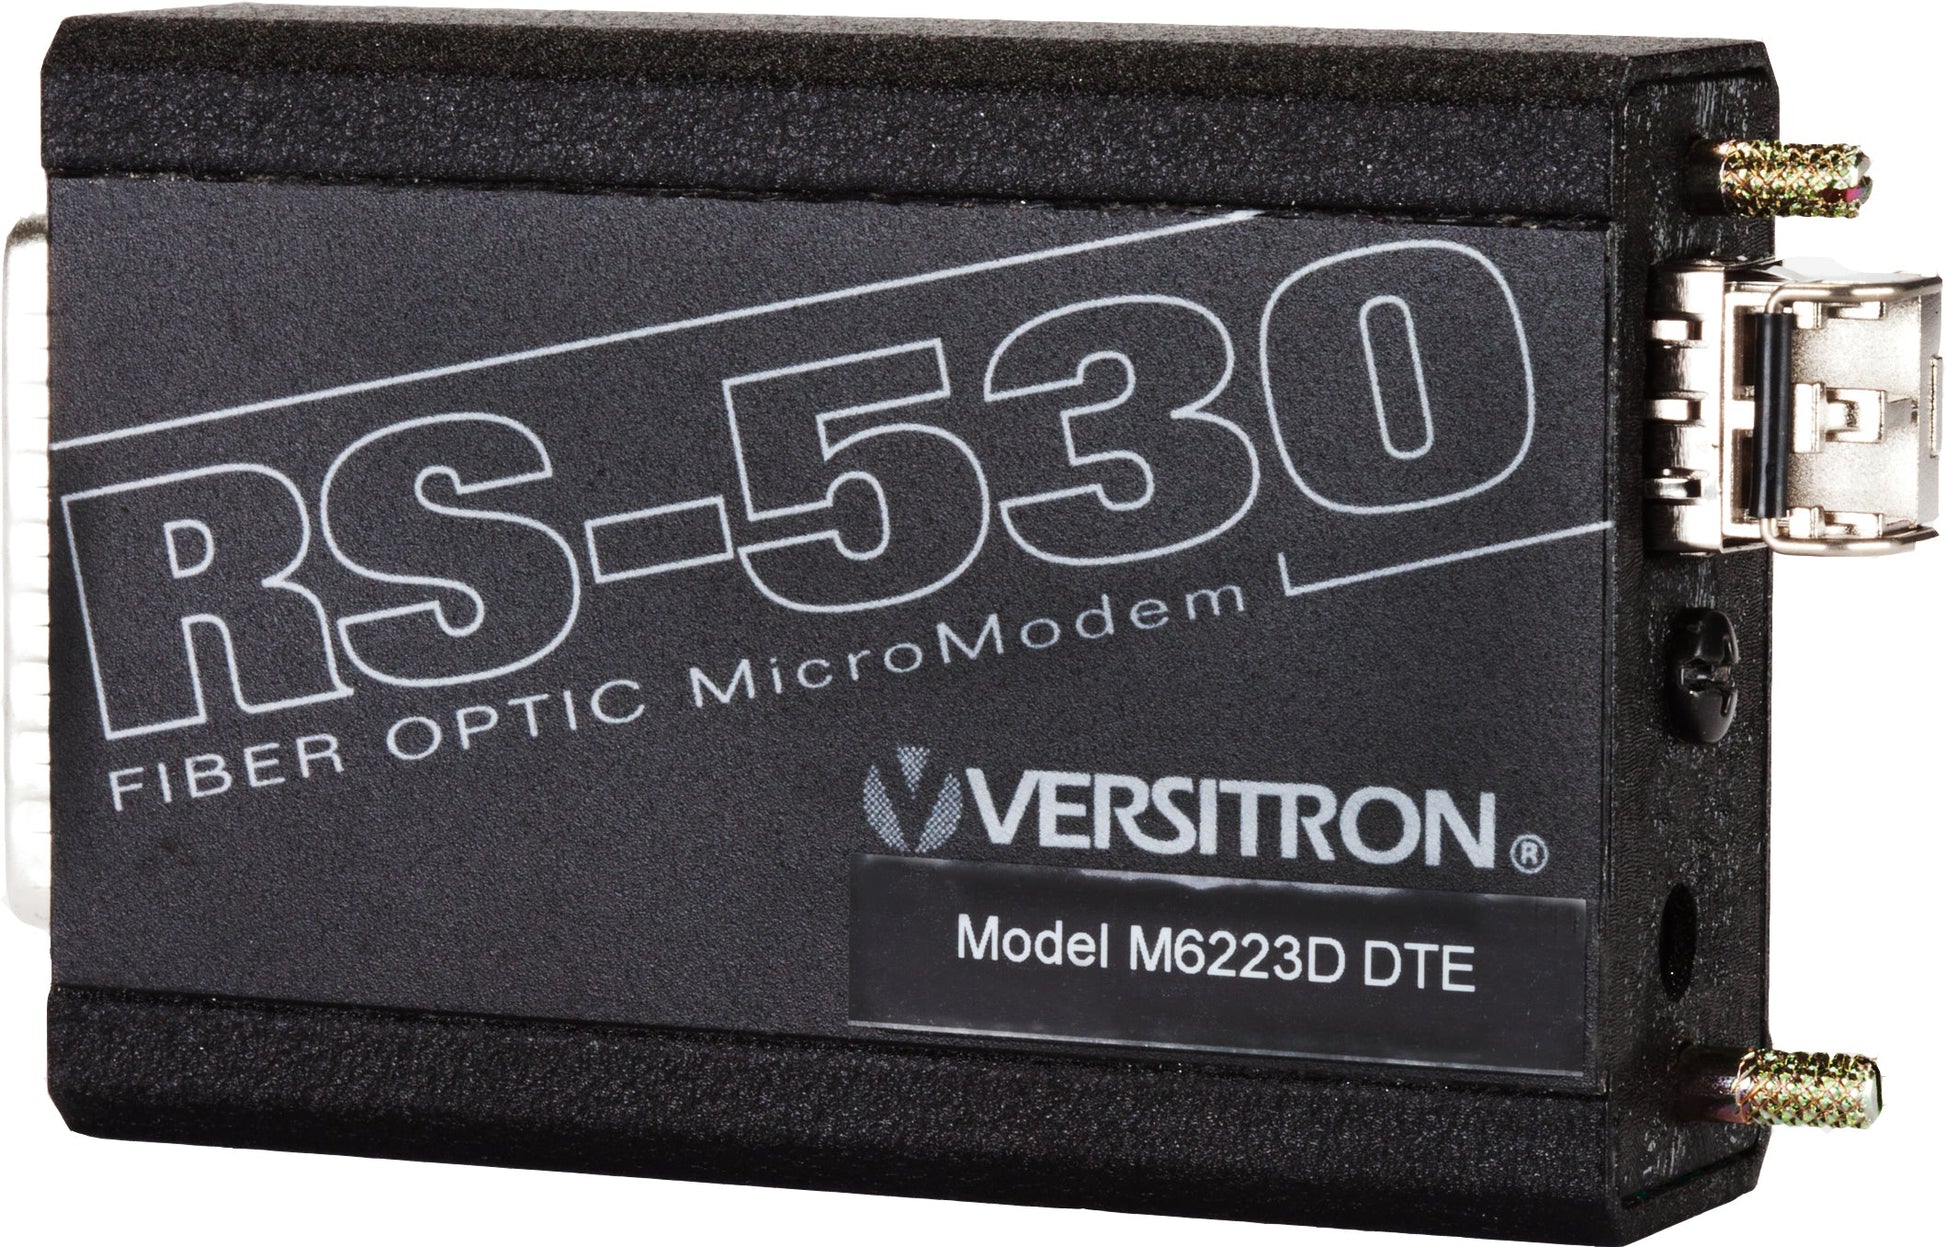 RS-530 Fiber Optic Micromodem